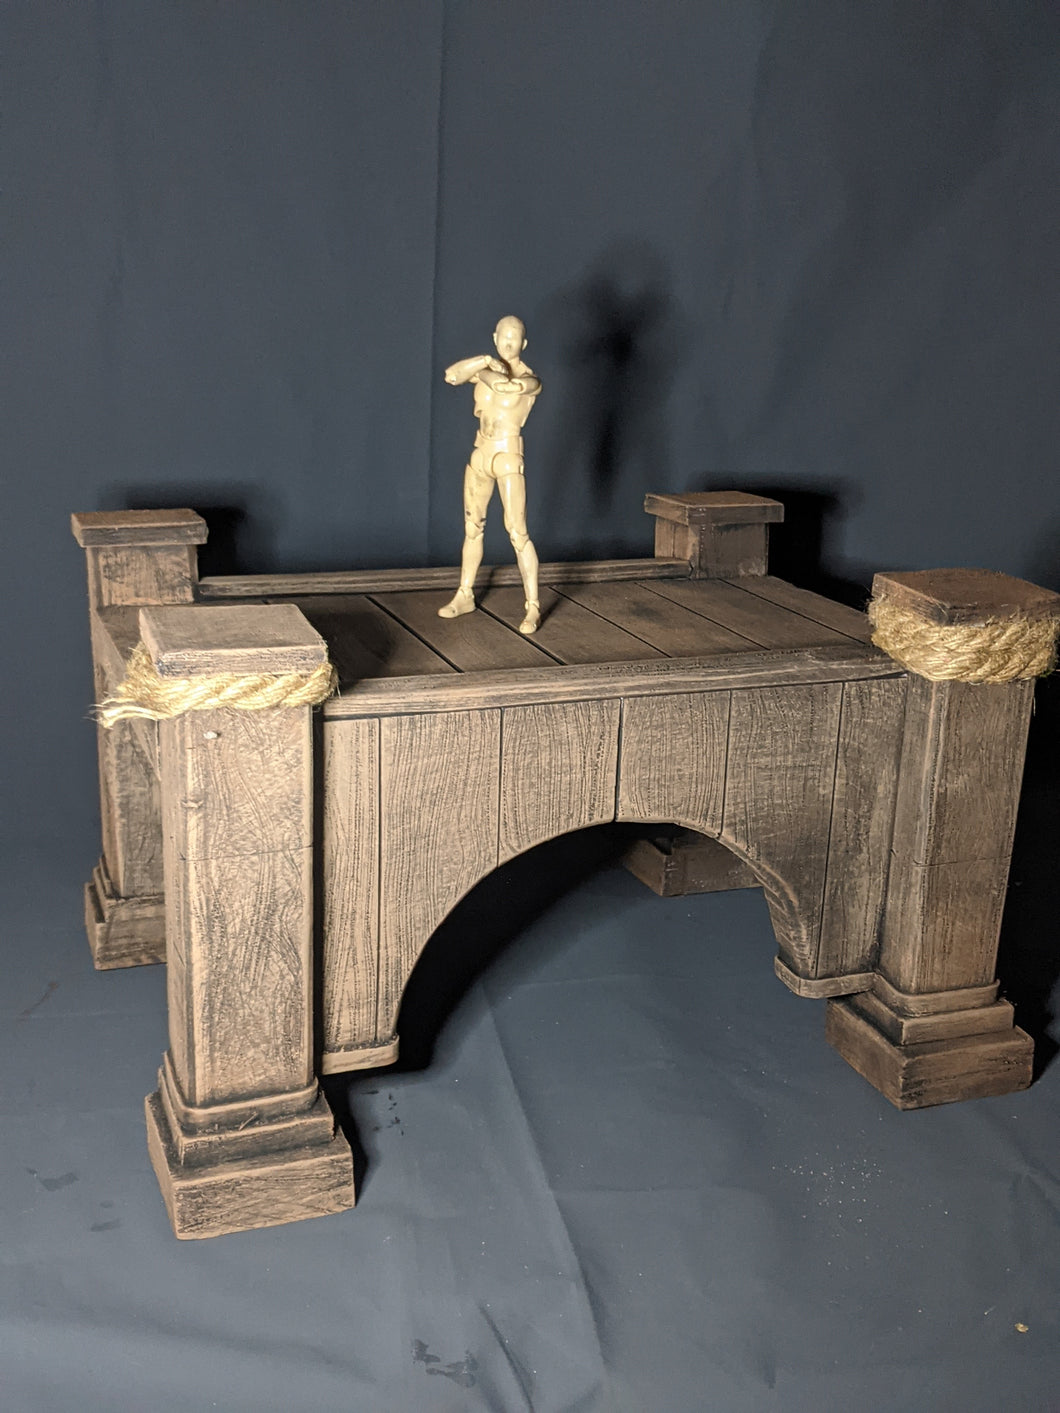 Mythic legions inspired bridge/tower action figure display diorama